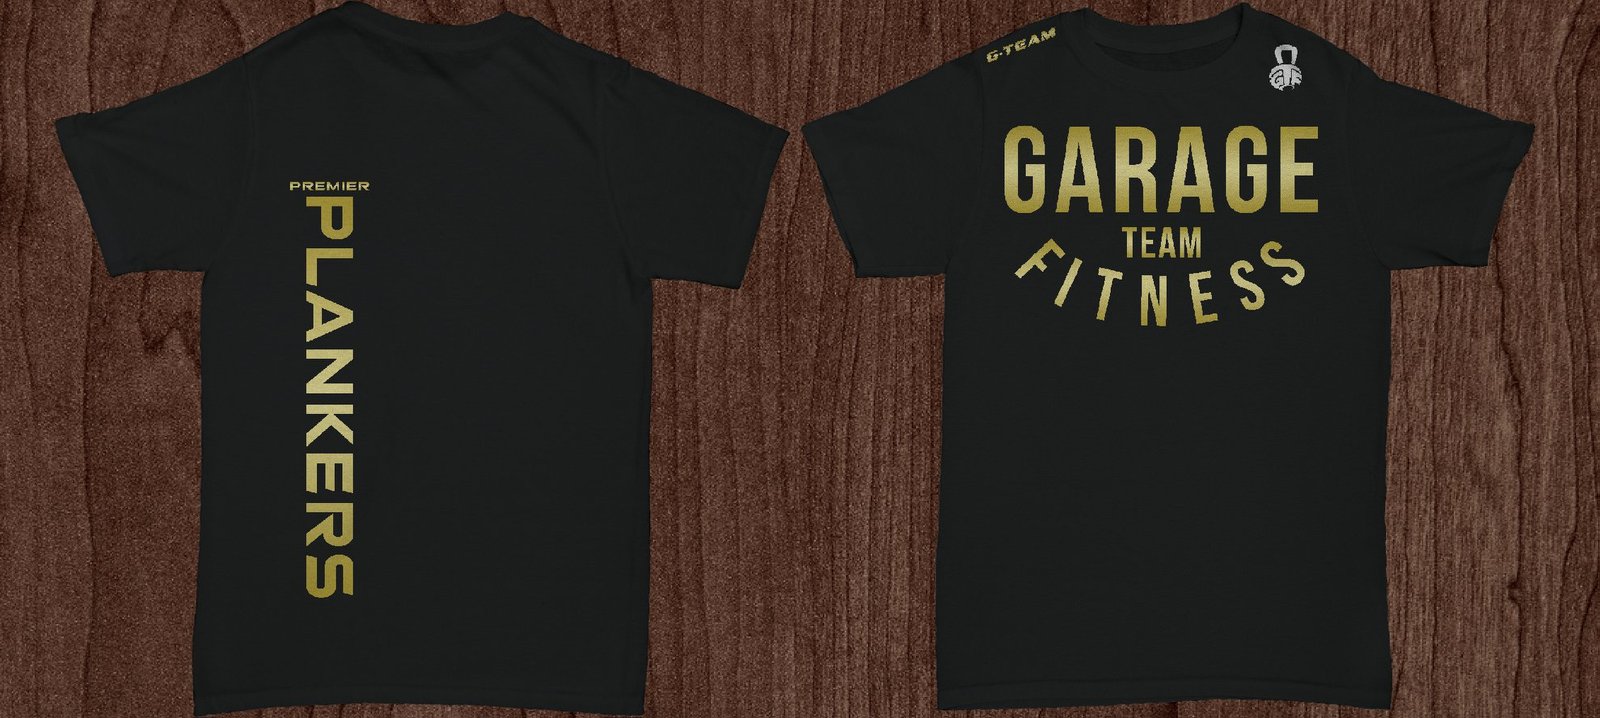 Garage Team Fitness Premier Plankers t-shirt